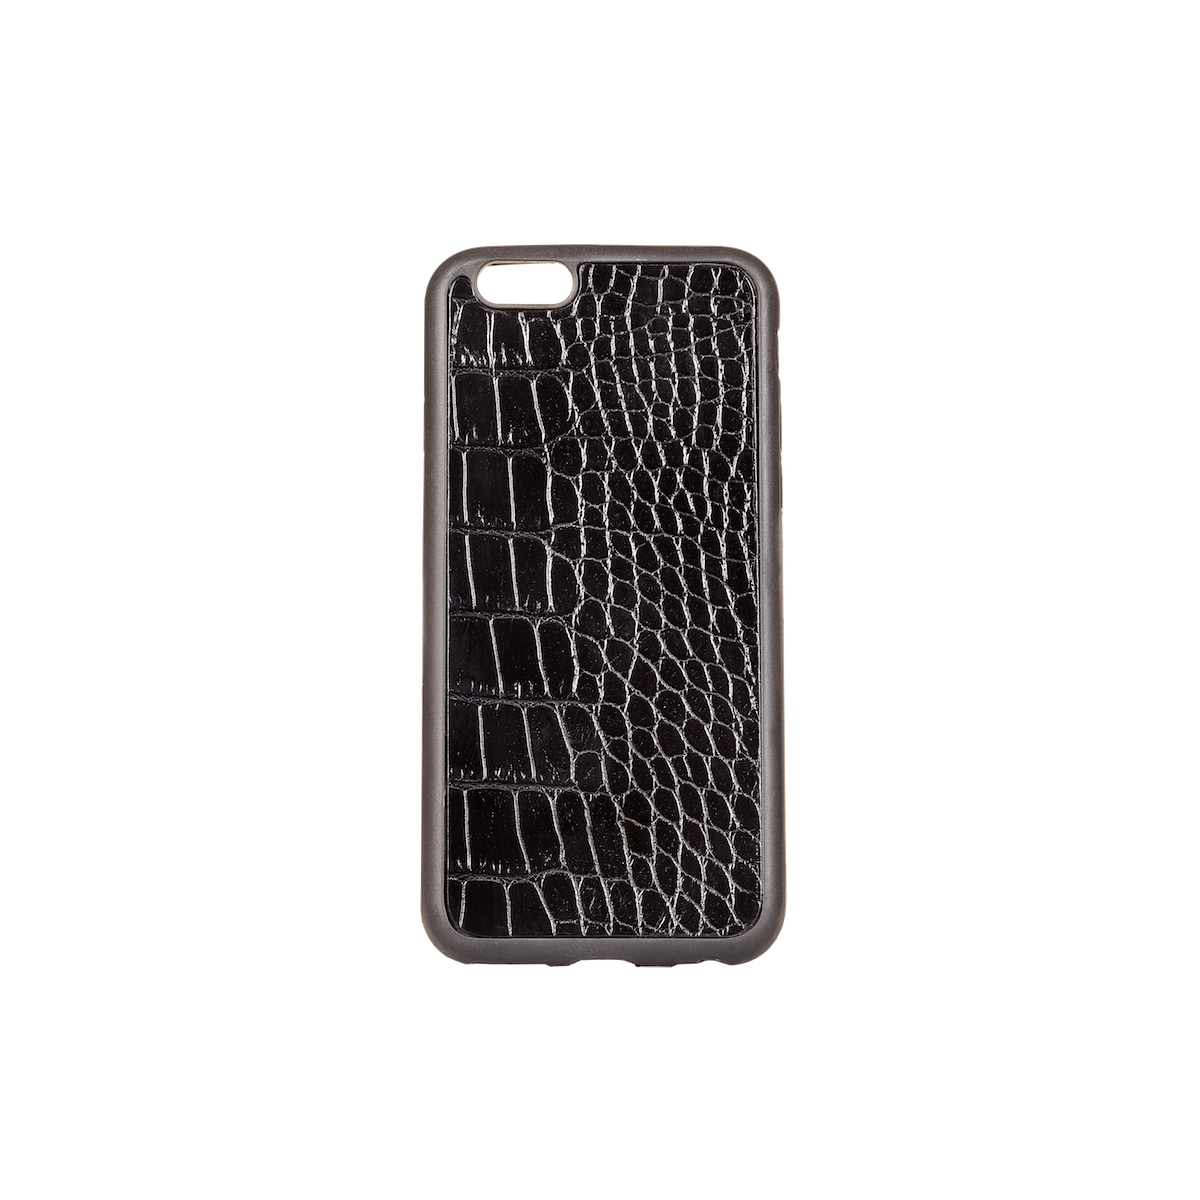 Iphone 6 Case, Black Croco Leather, MAISON JMK-VONMEL Luxe Gifts